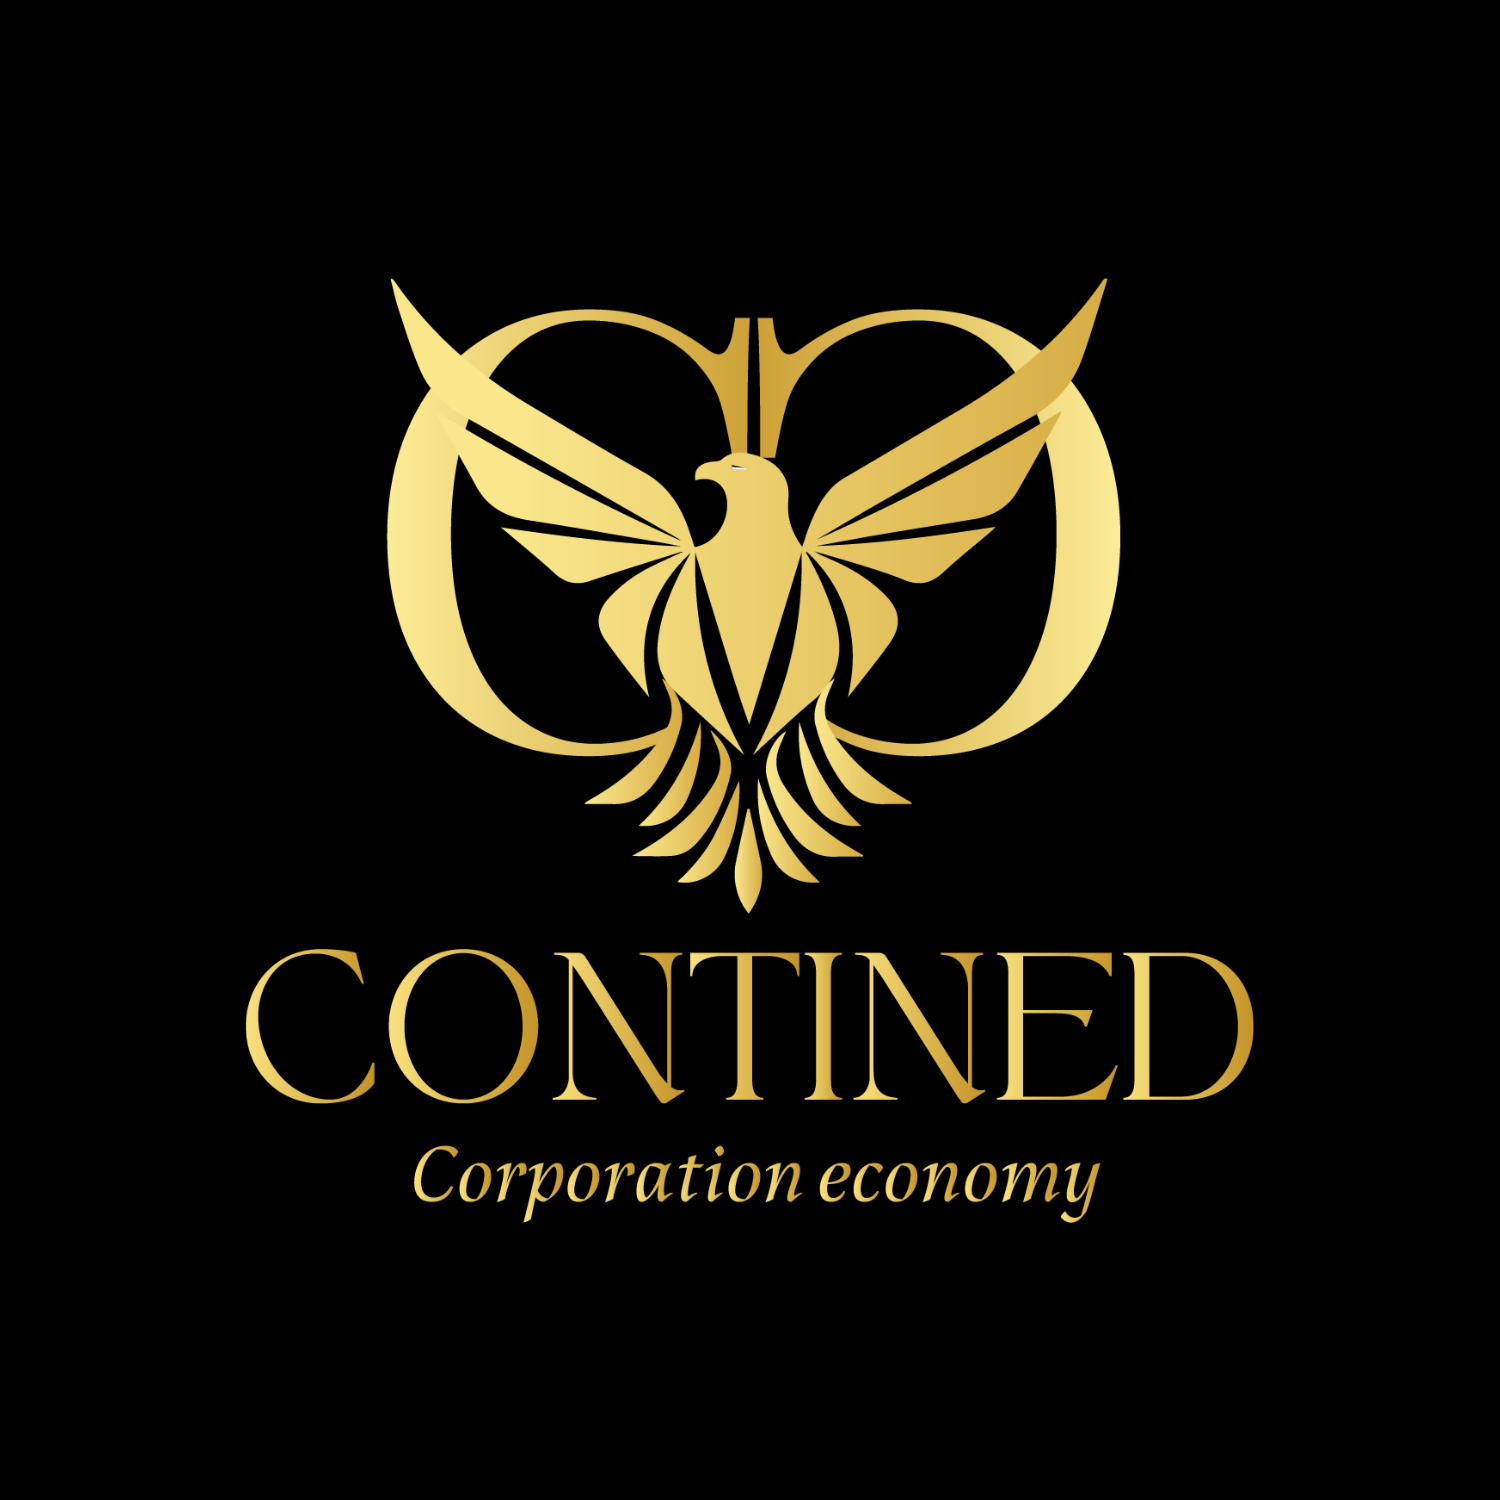 Contined Corporation Economy